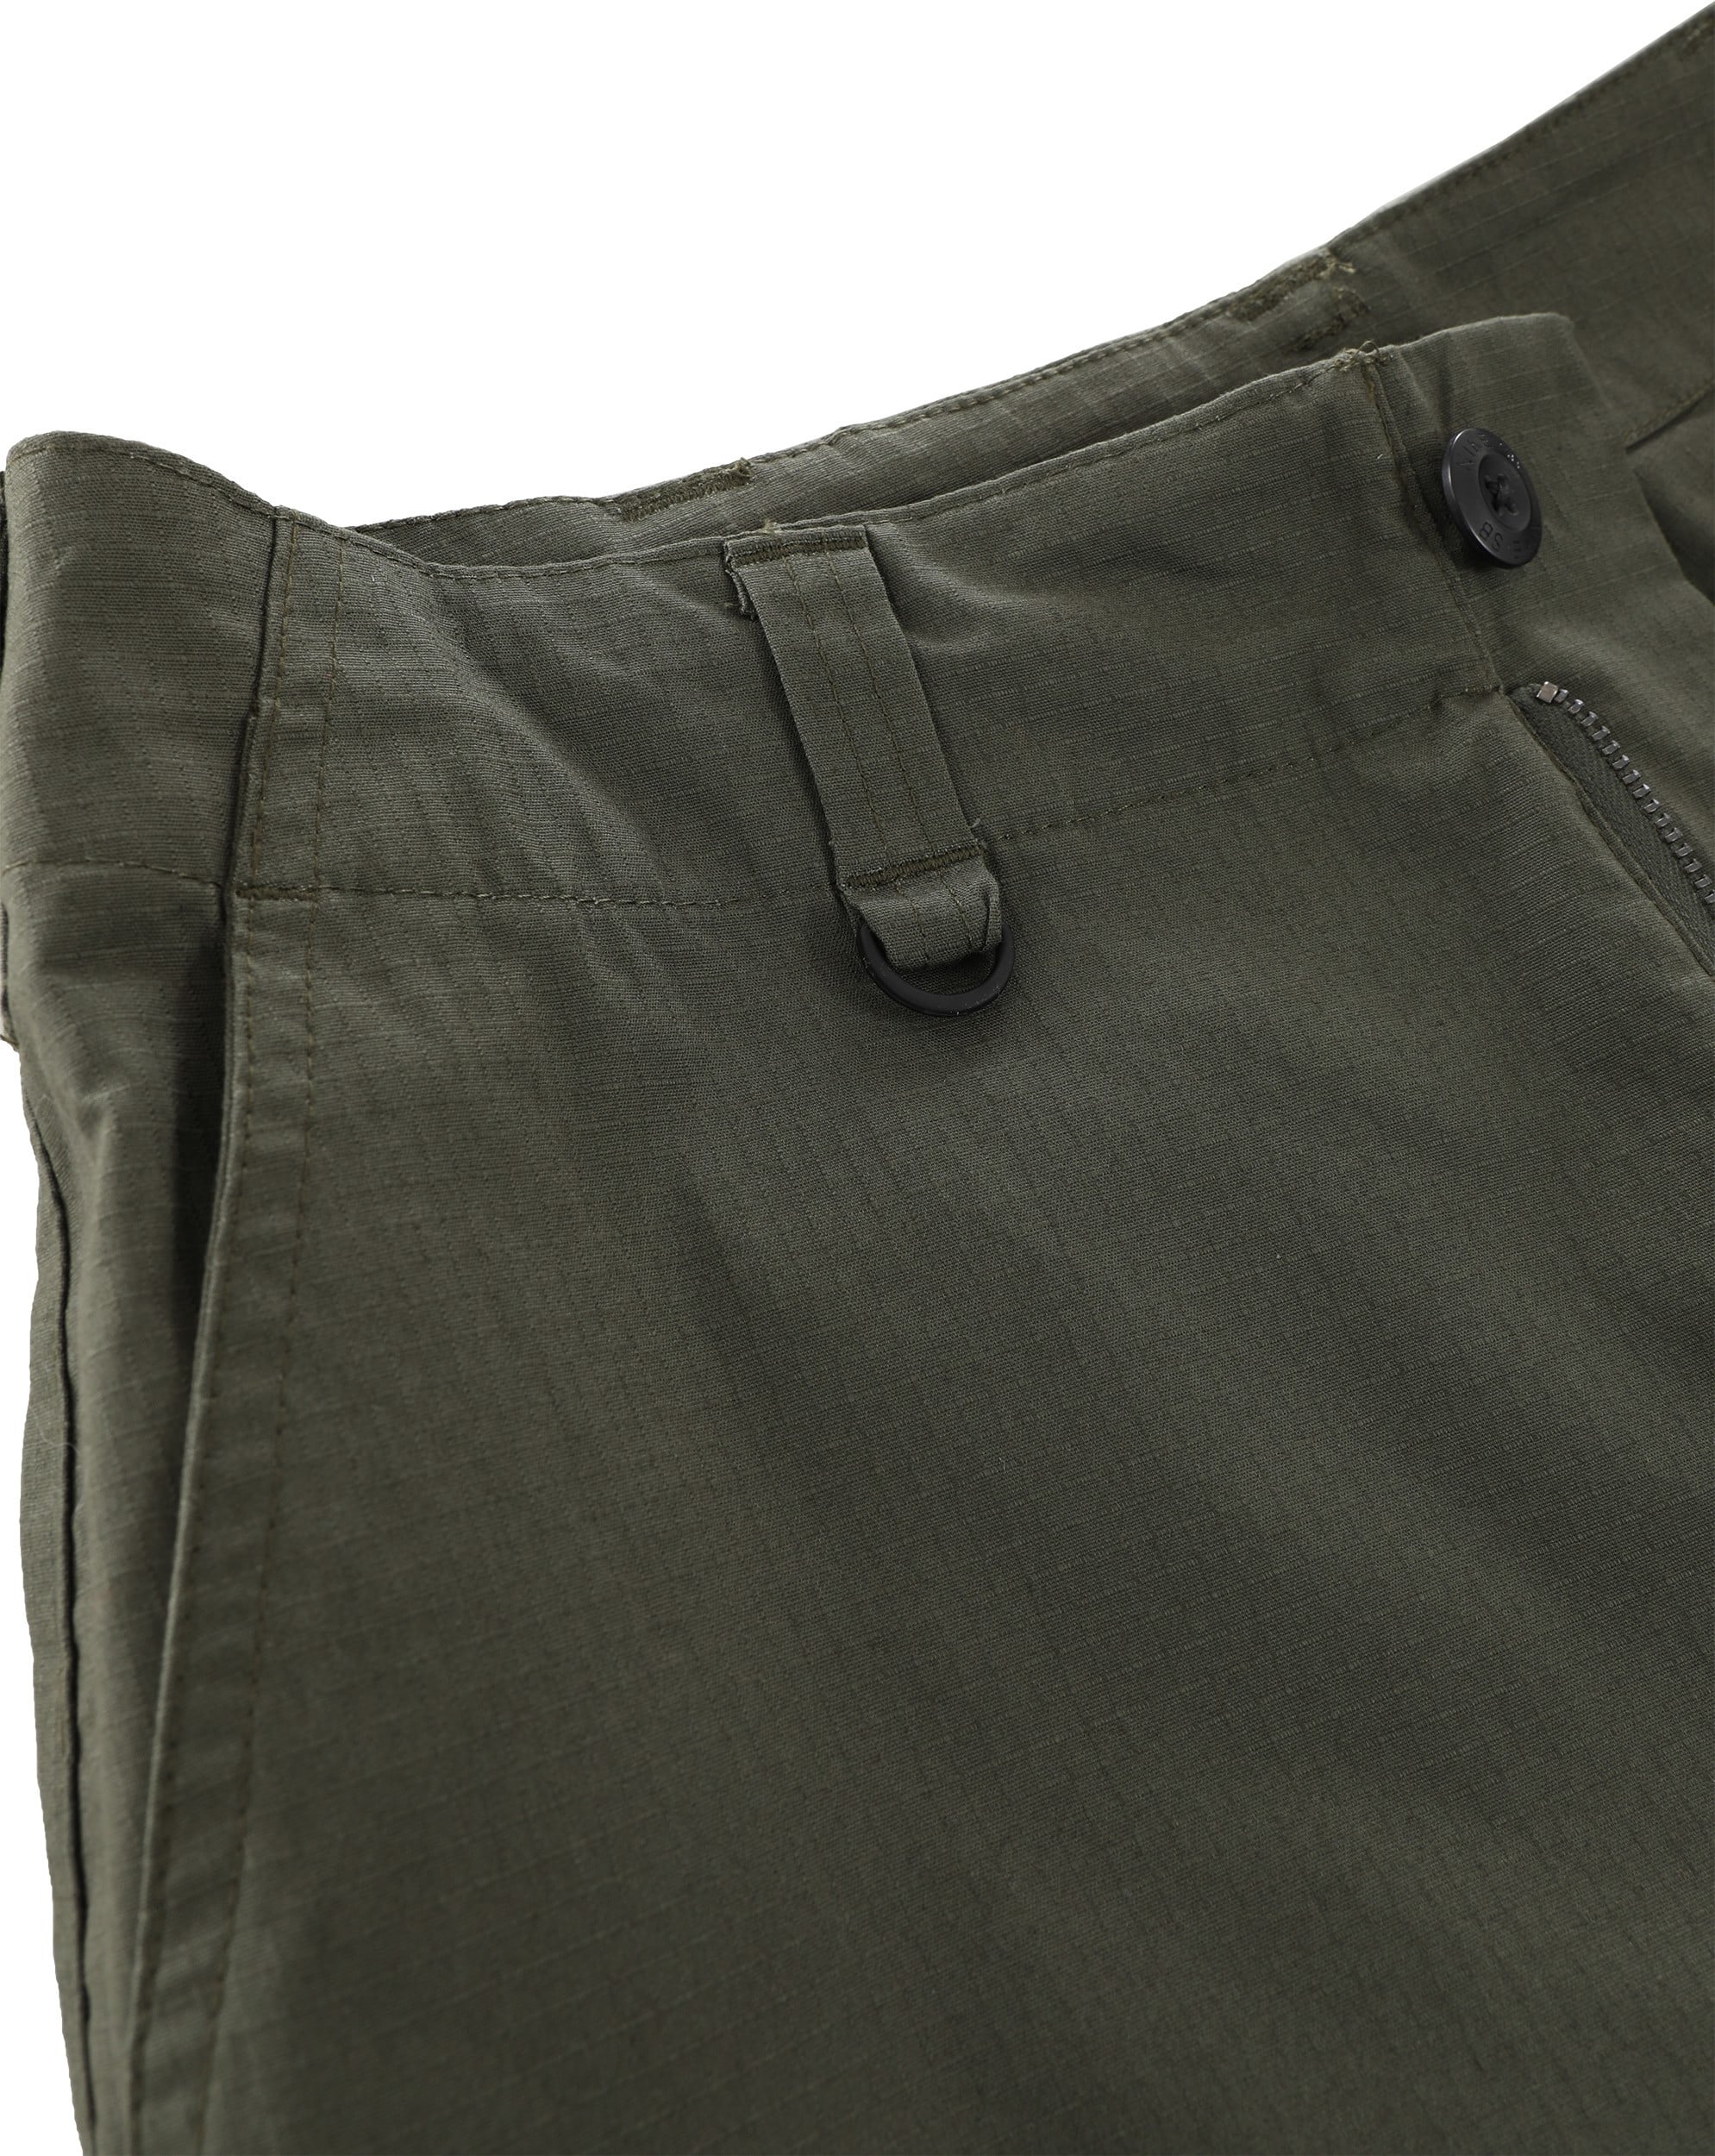 Nike SB SB Cargo Pants - cargo khaki | Tactics